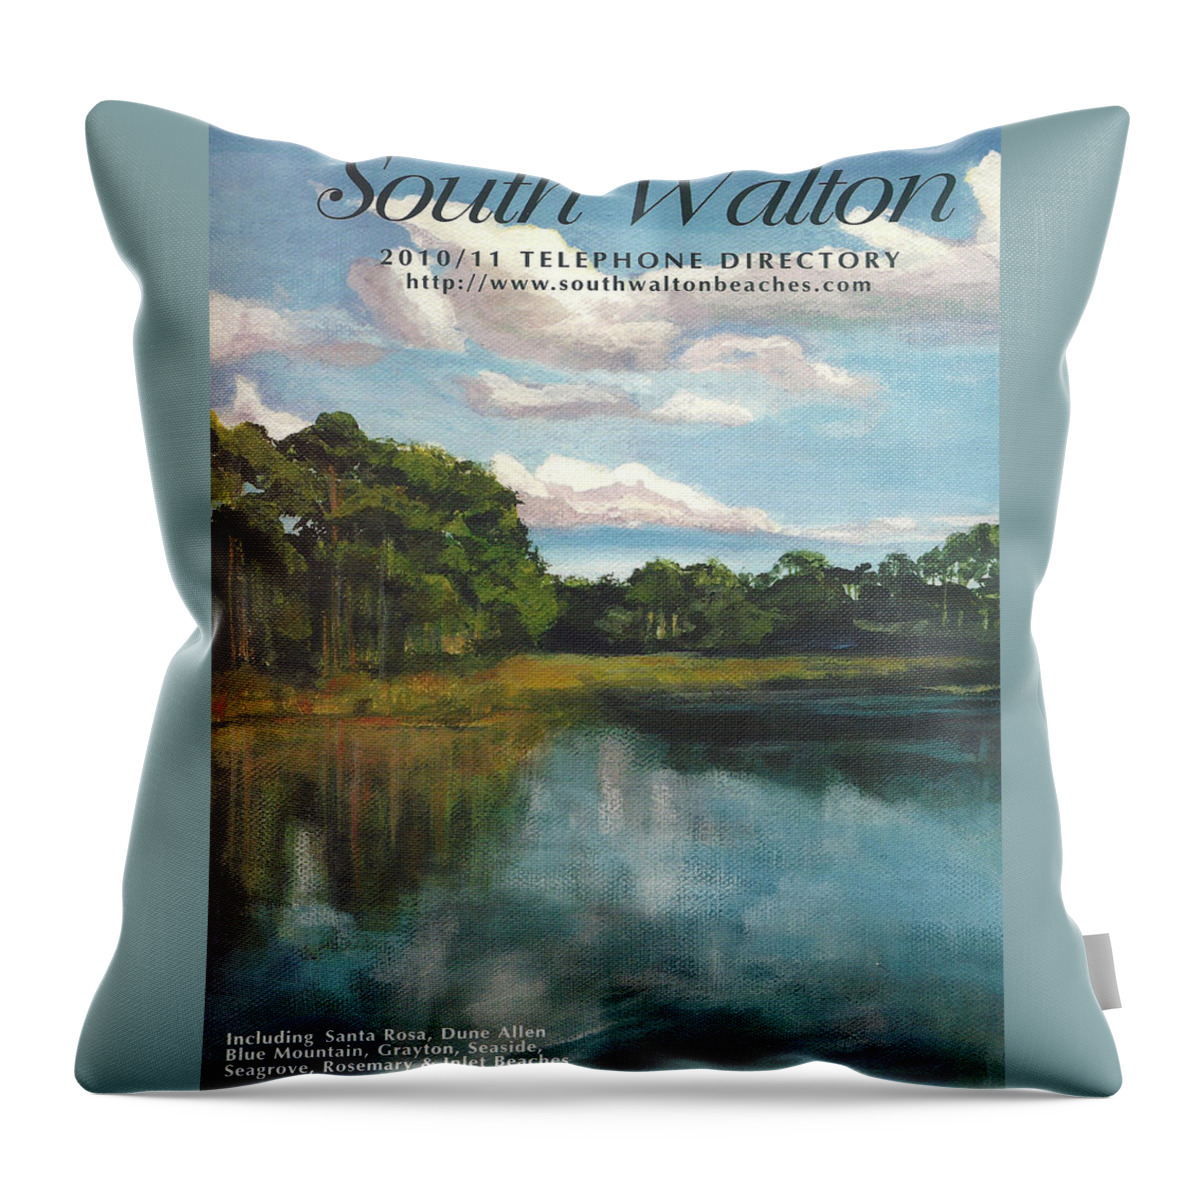 South Walton Telephone Directory Throw Pillow featuring the painting South Walton Telephone Directory Cover Art by Racquel Morgan